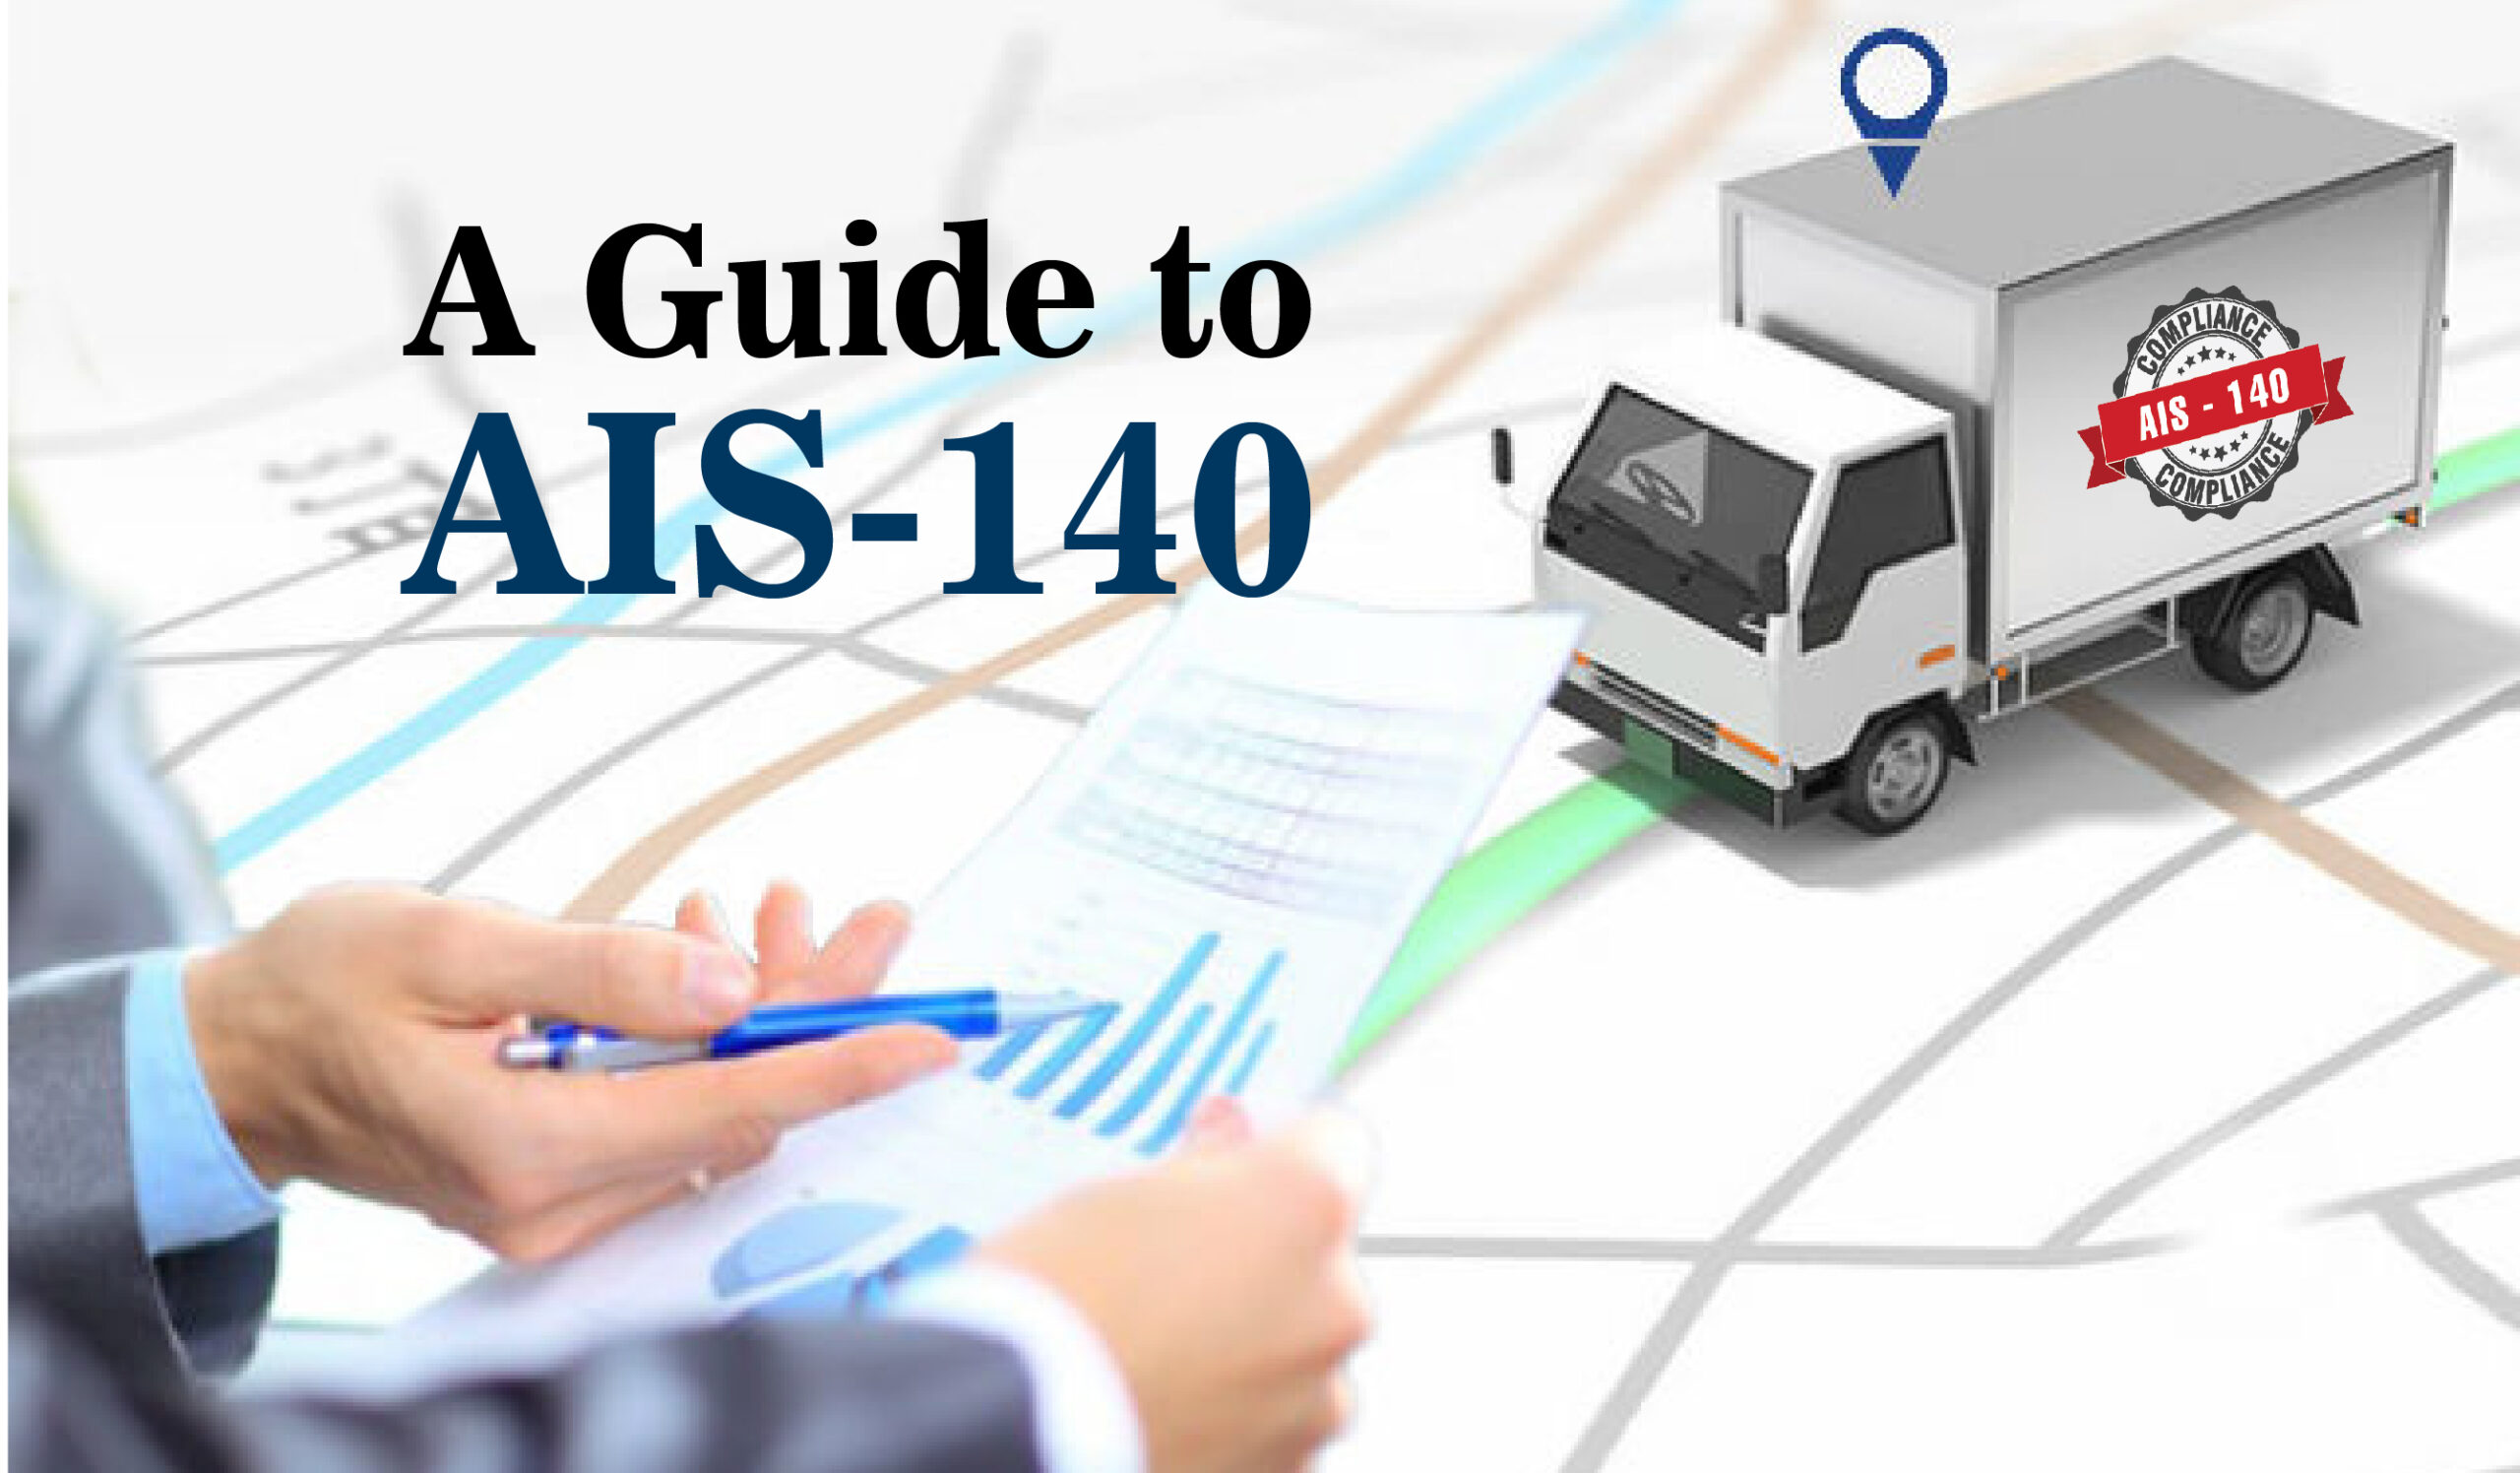 5 Common Misconceptions About AIS 140